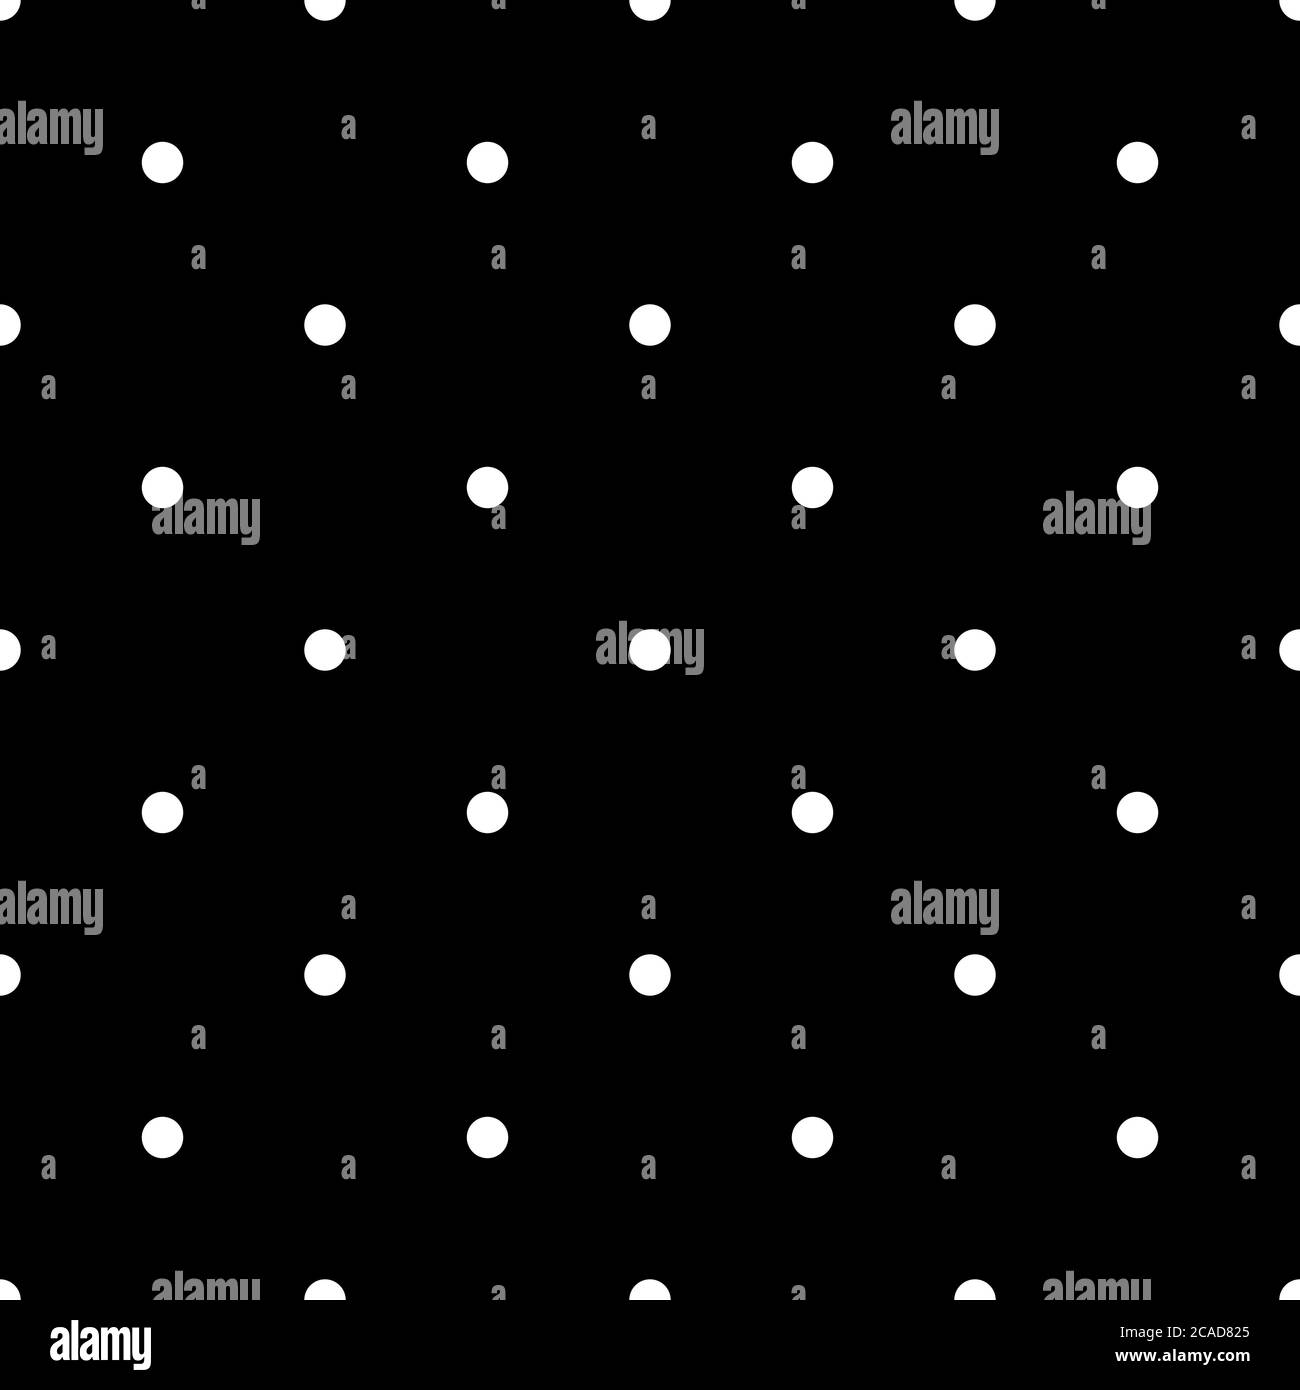 Seamless polka dot pattern. White dots on black background. Vector illustration. Stock Vector